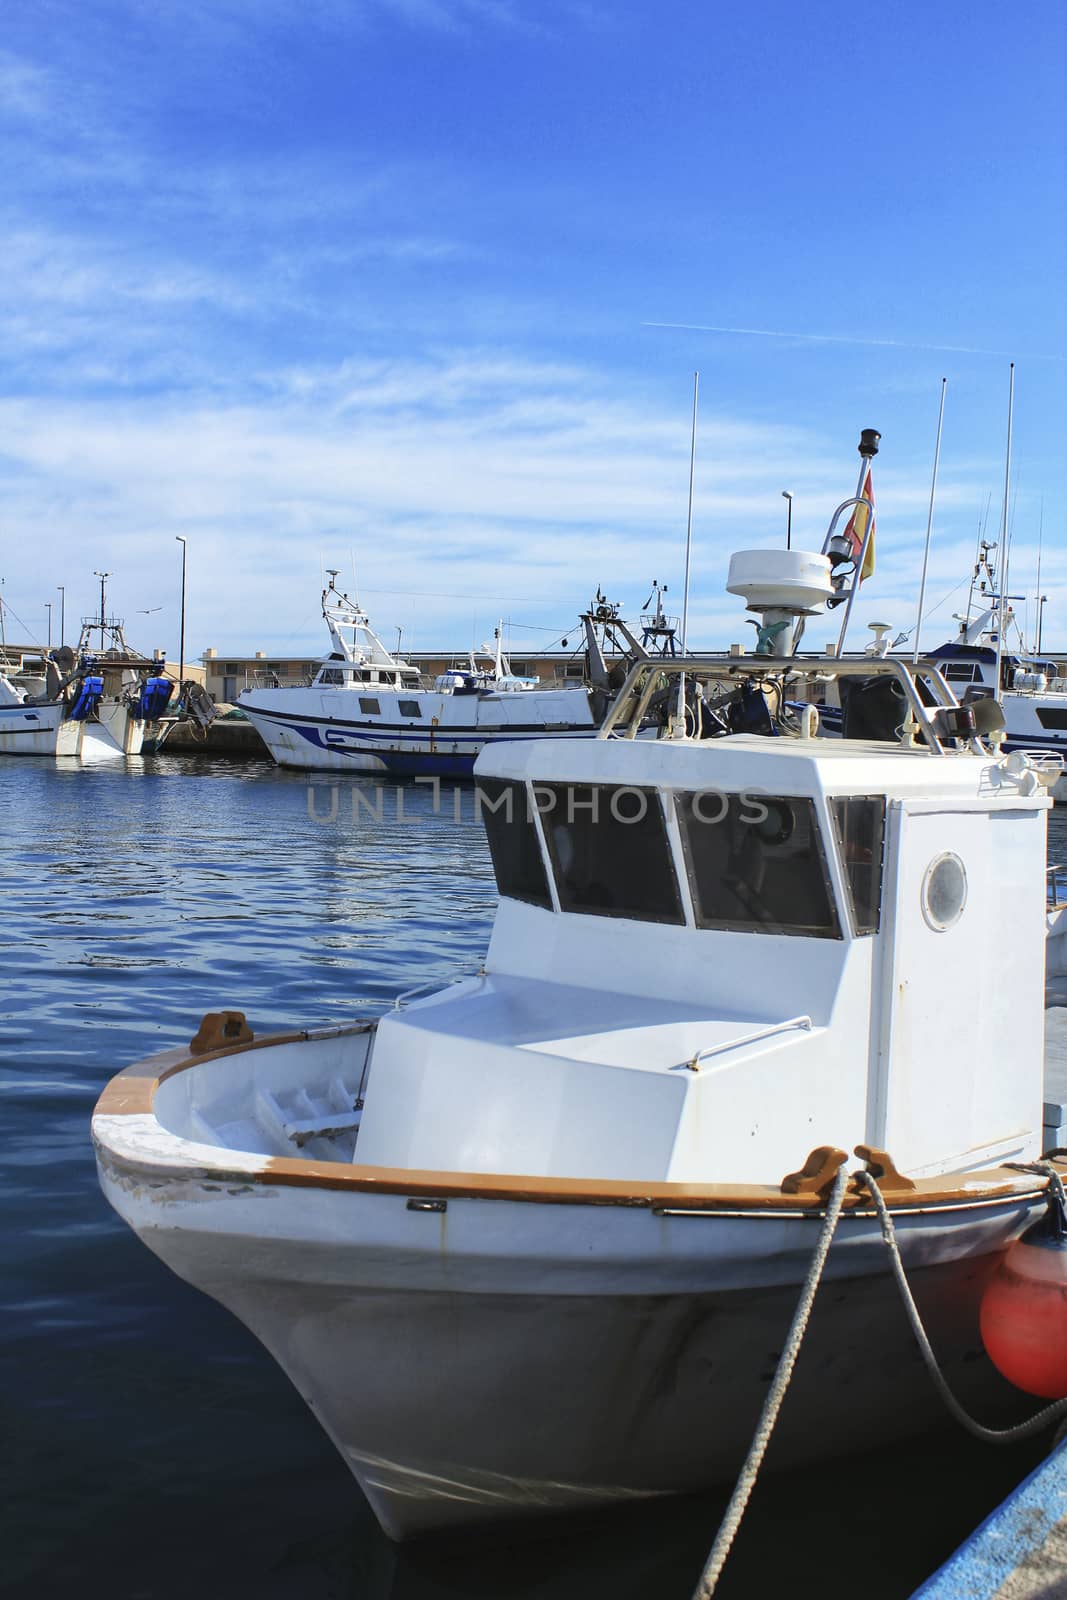 Fishing boats moored in the port of Santa Pola, Alicante